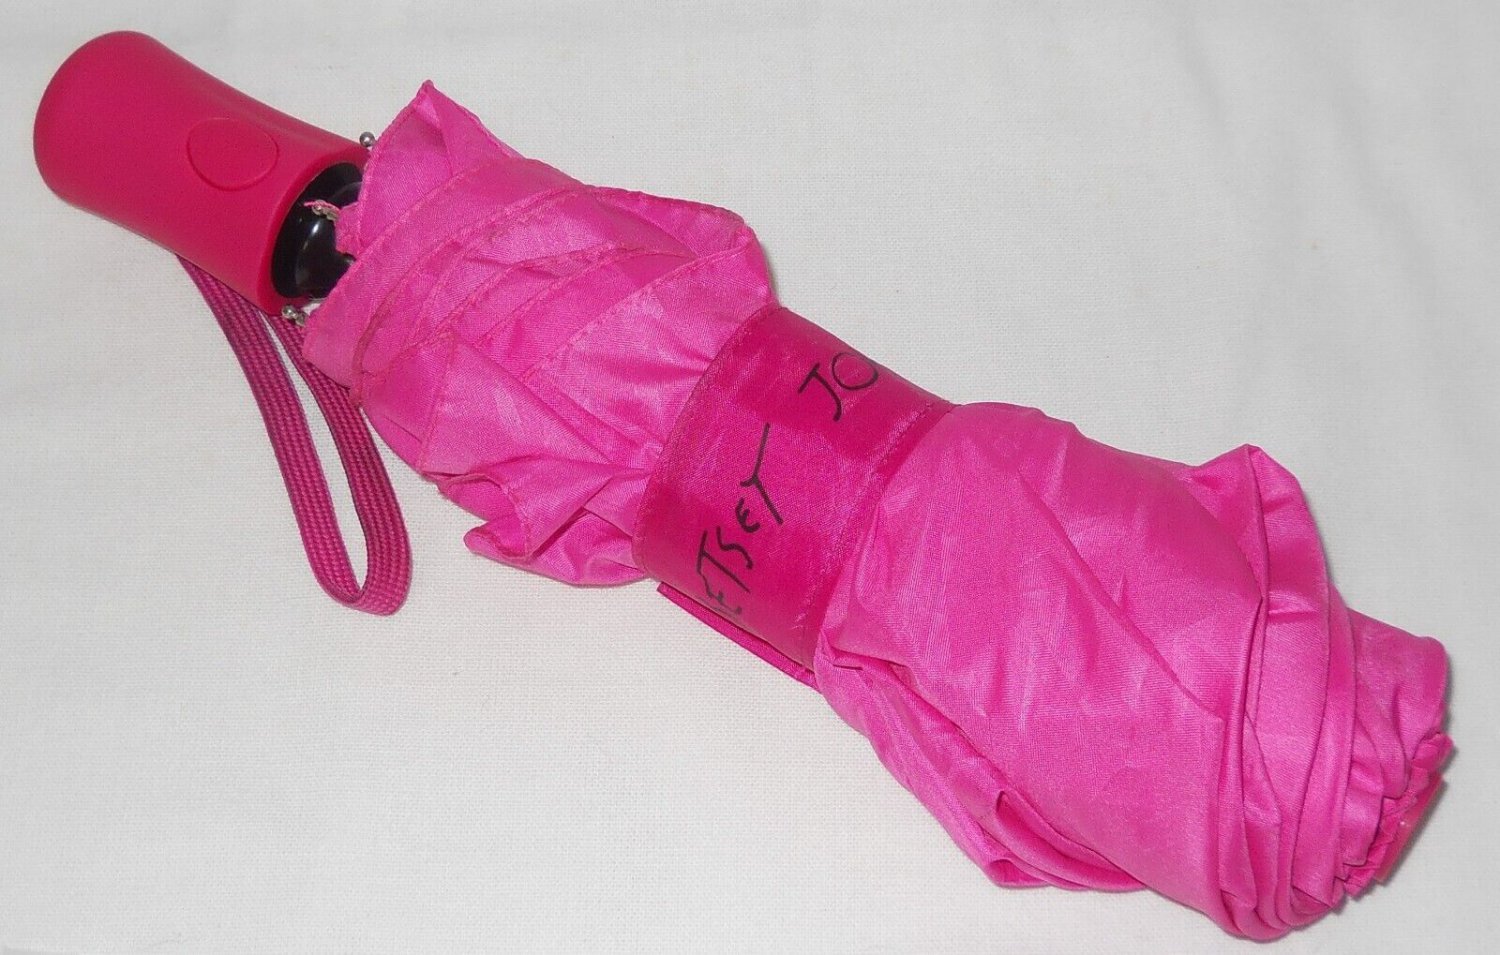 Betsey Johnson Pink Umbrella With Push Button & Wrist Strap Travel Size